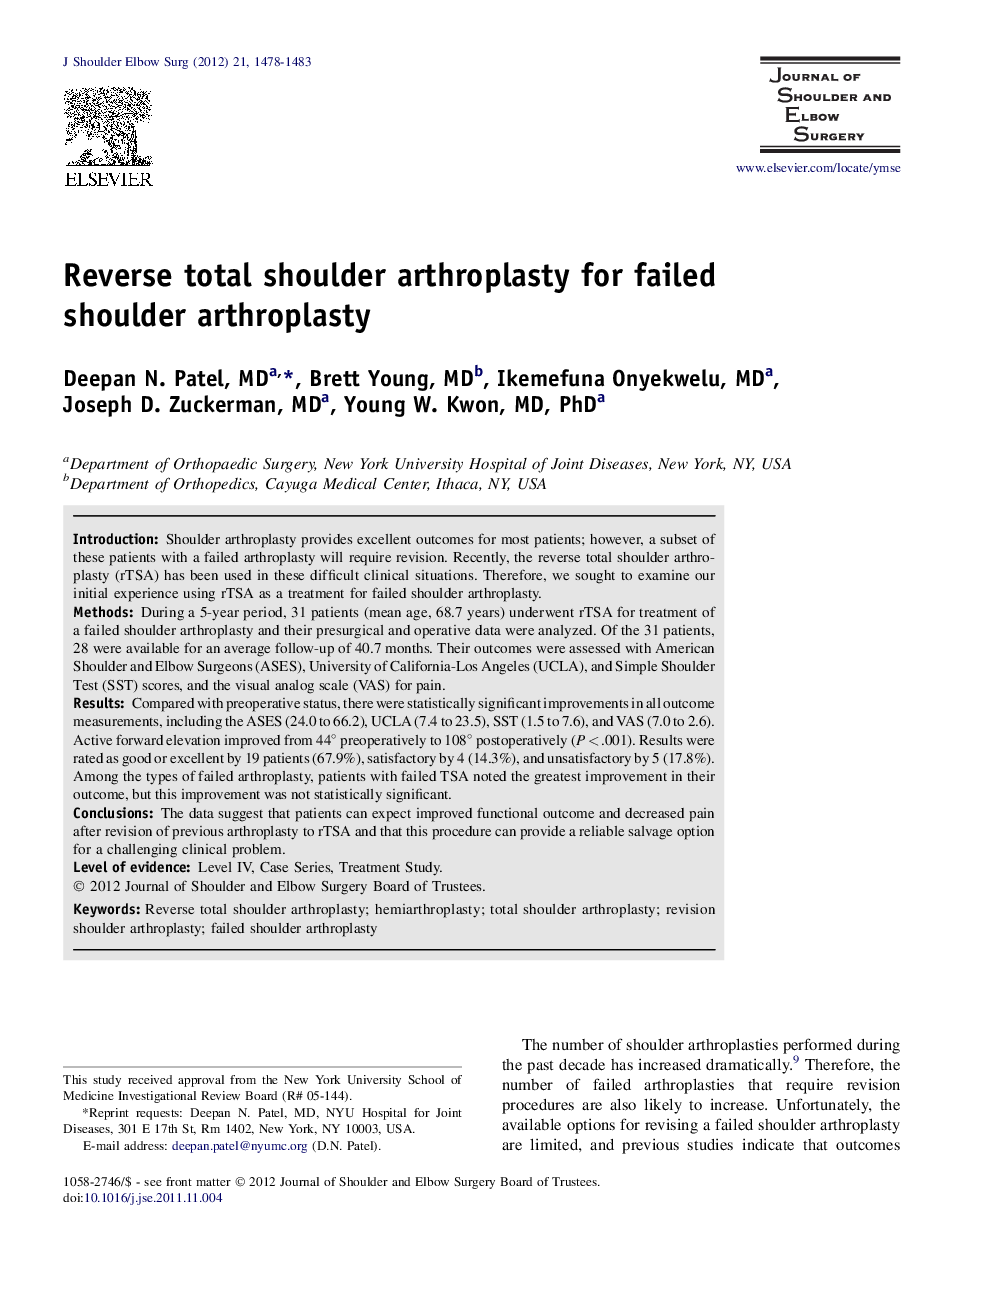 Reverse total shoulder arthroplasty for failed shoulder arthroplasty 